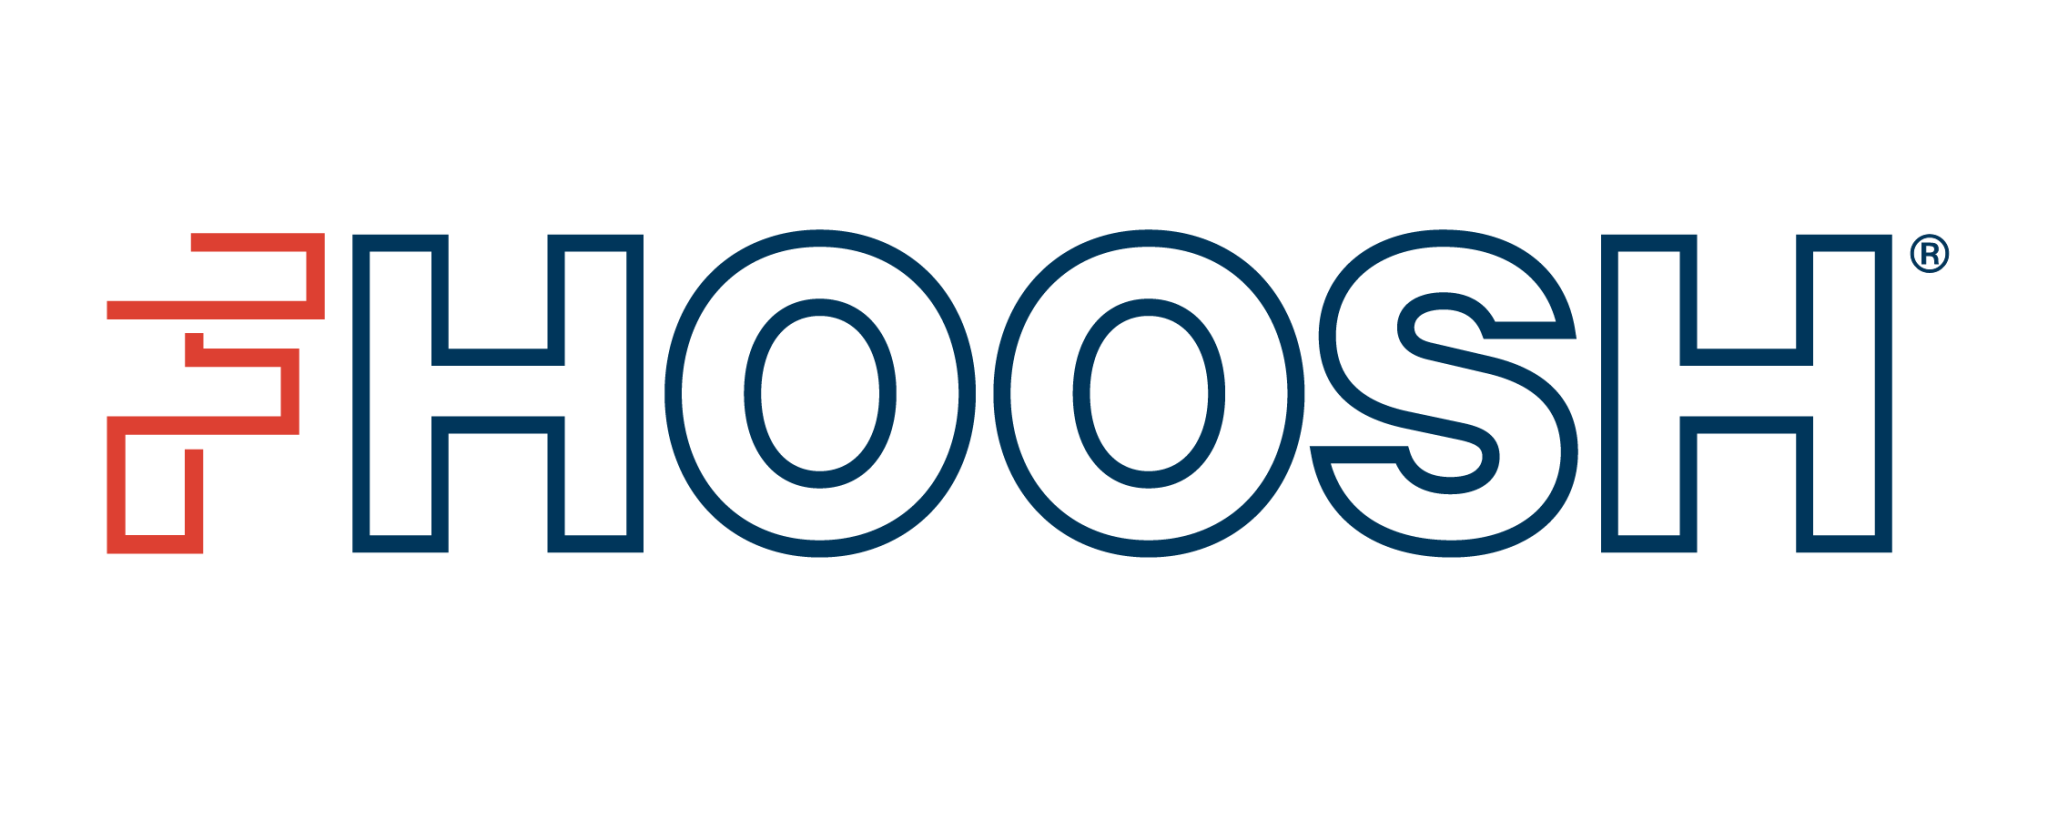 fhoosh Logo